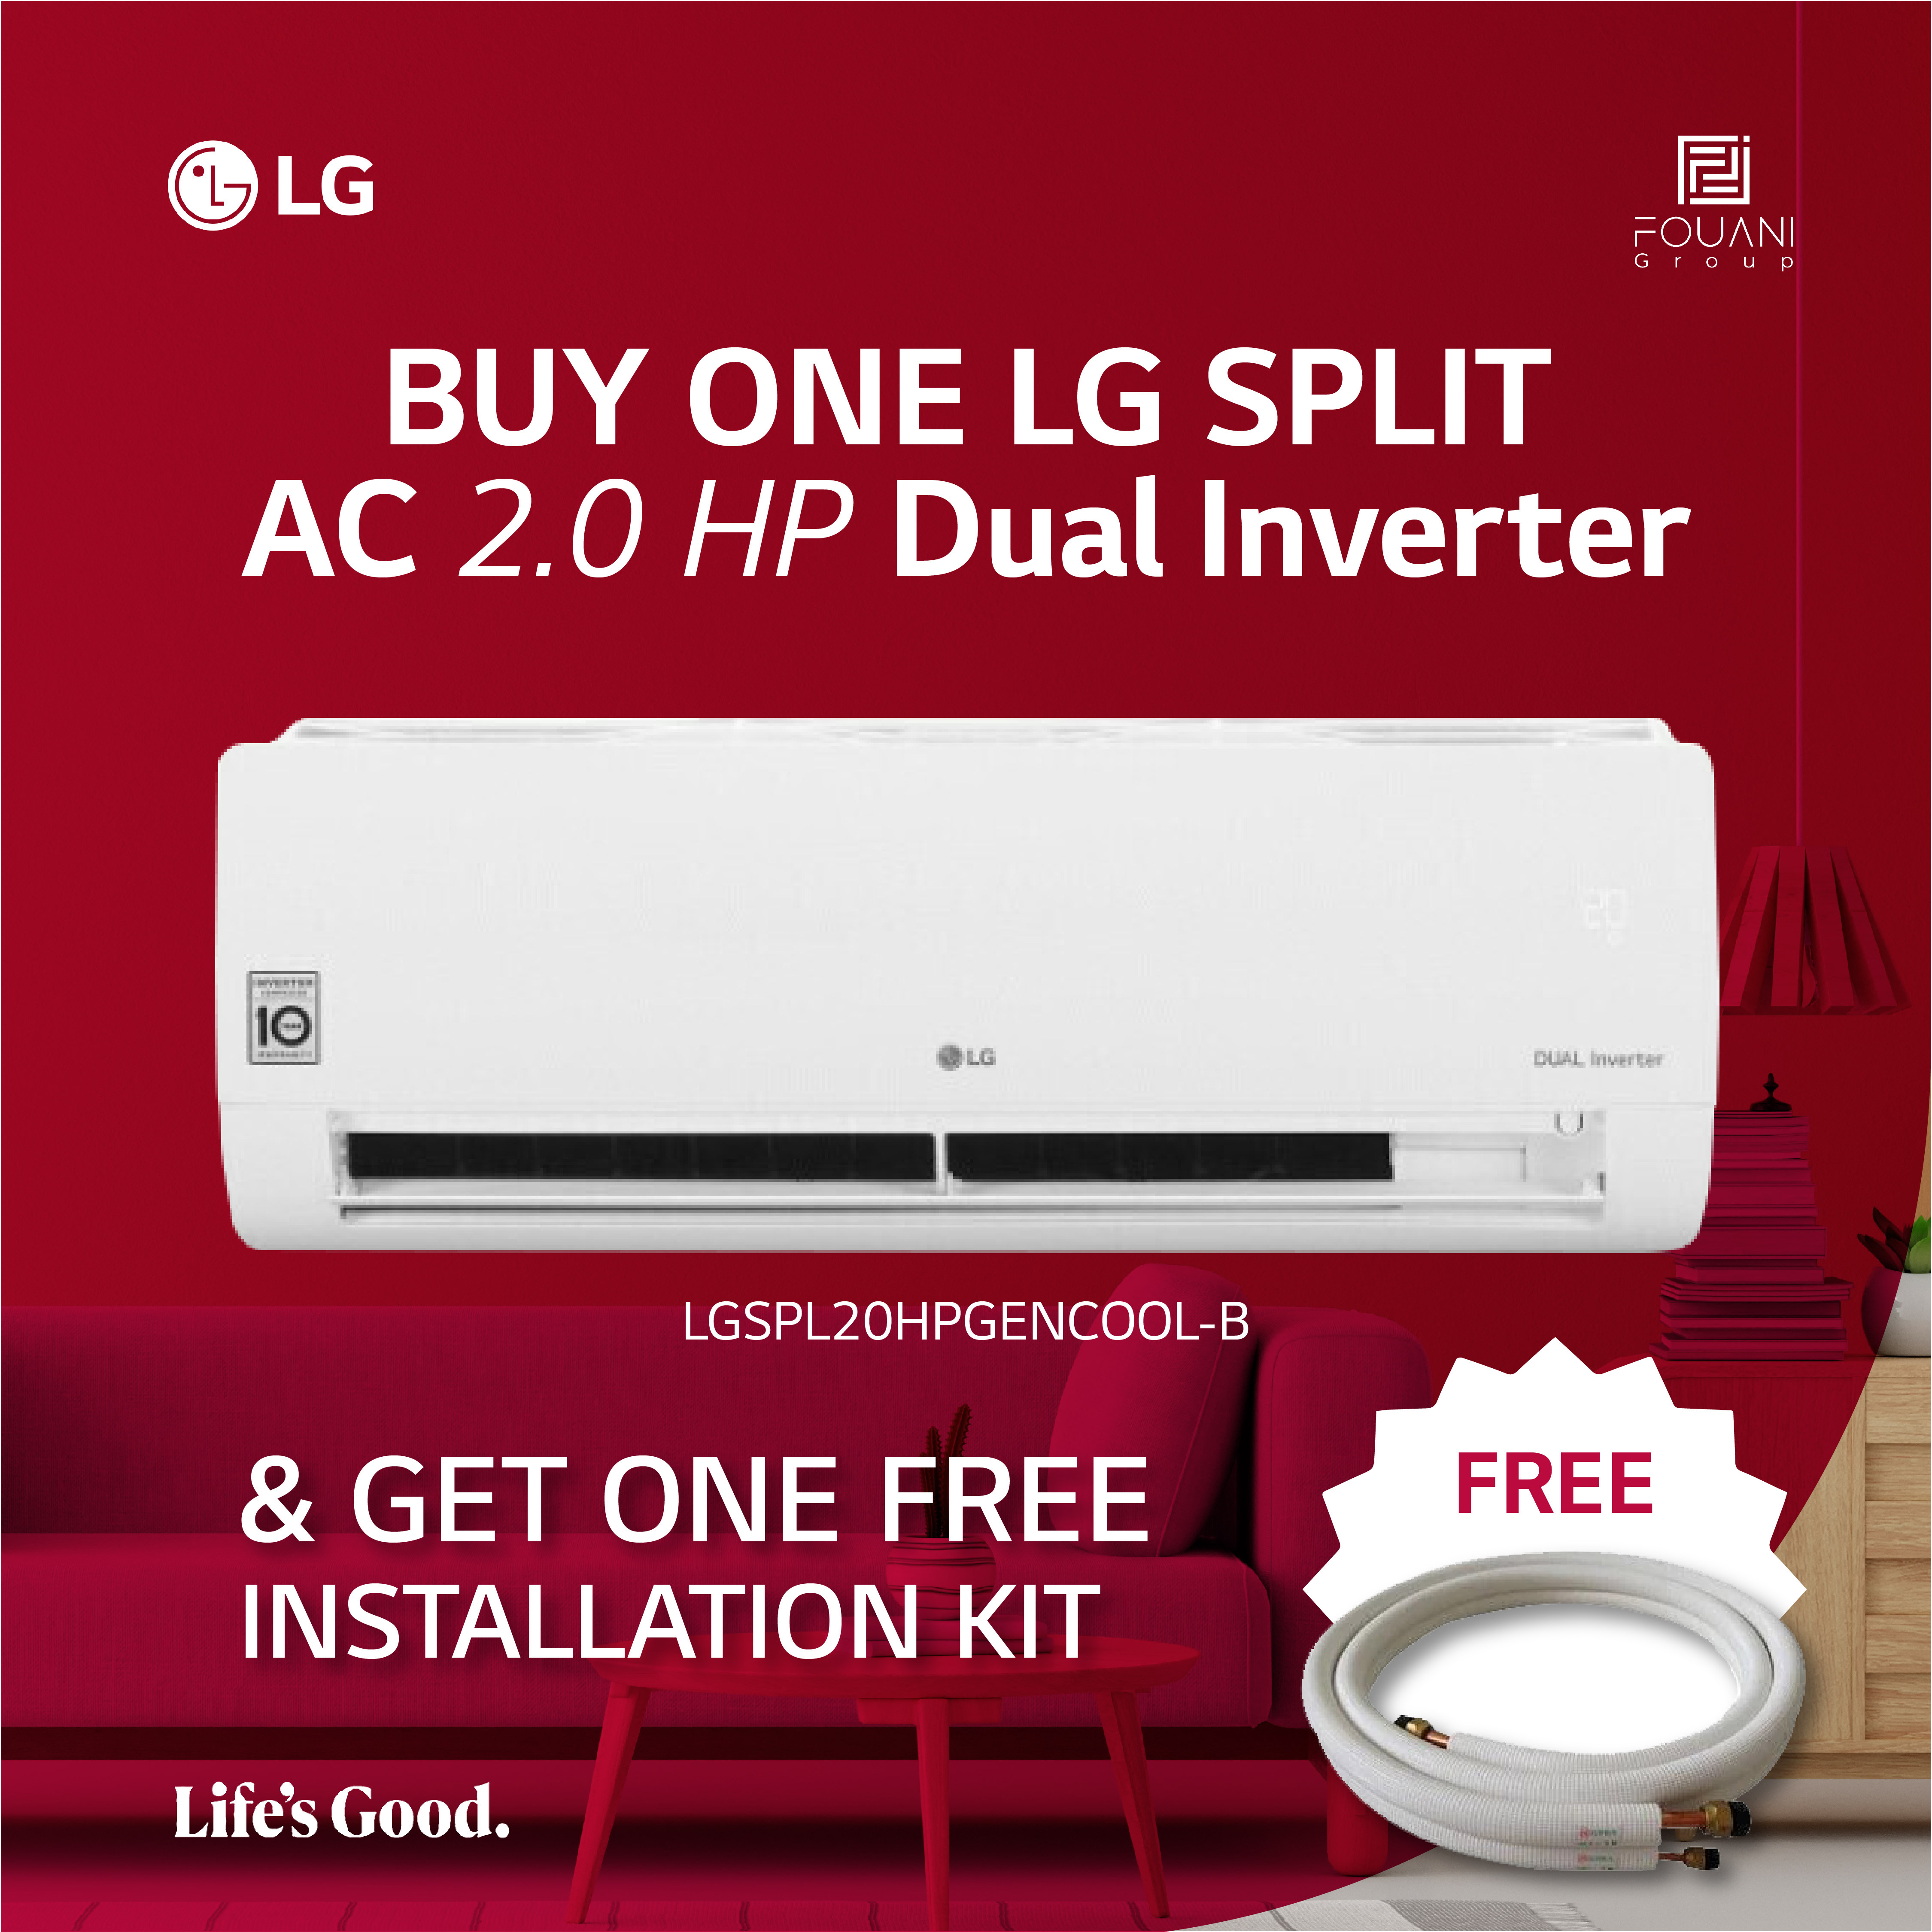 LG Split AC 2.0HP Dual Inverter